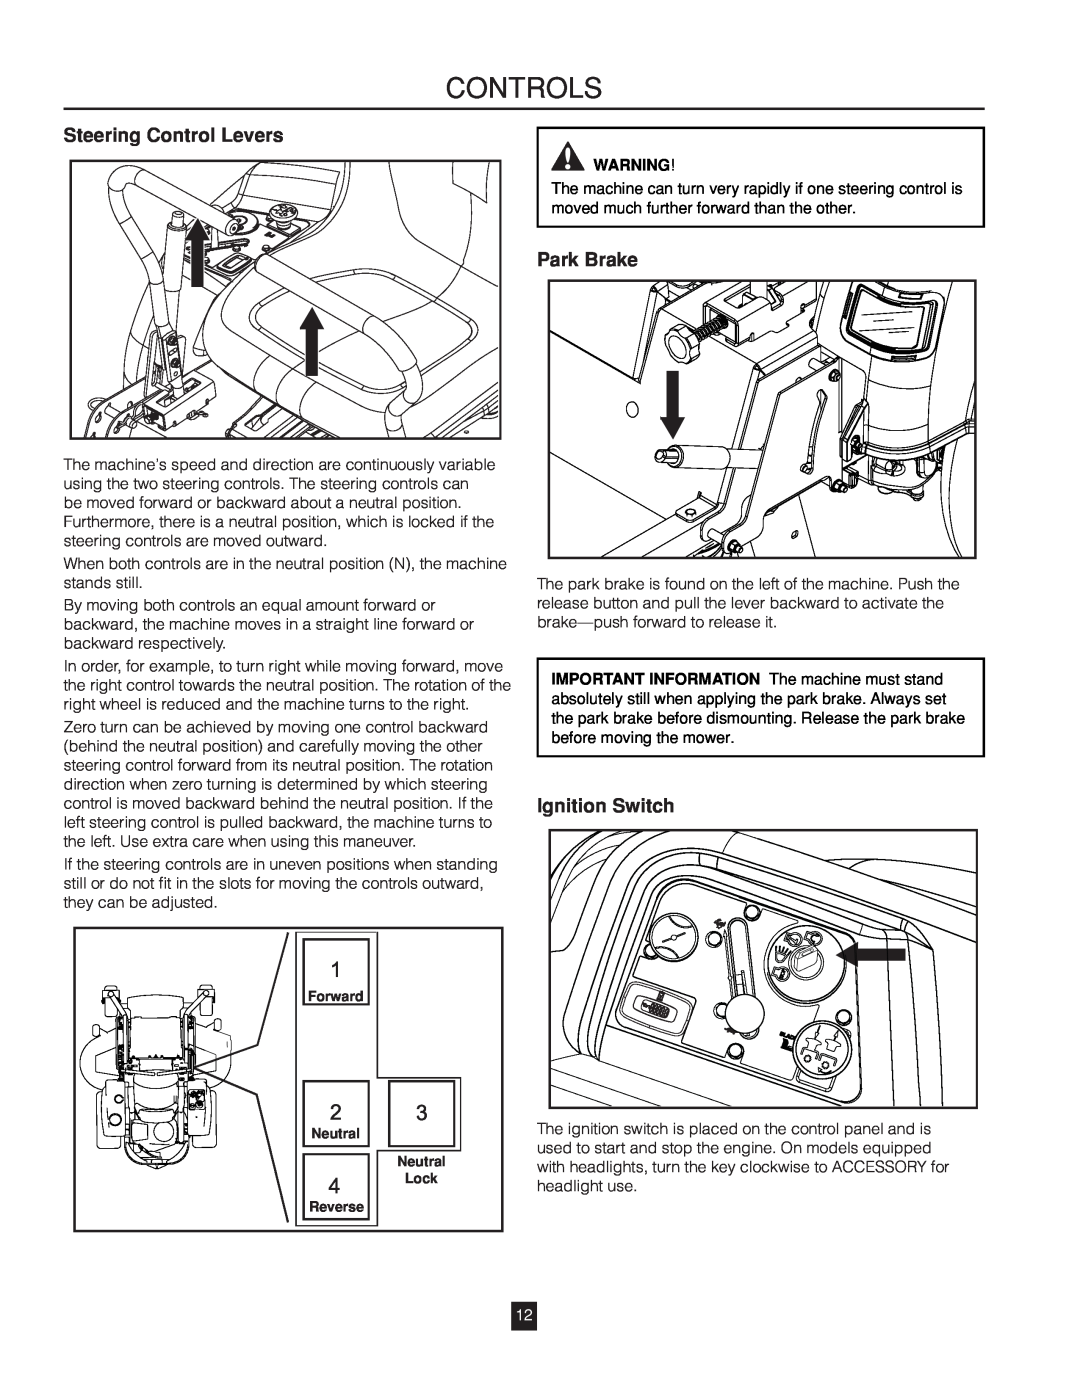 Husqvarna RZ46215 warranty Steering Control Levers, Park Brake, Ignition Switch, Controls 